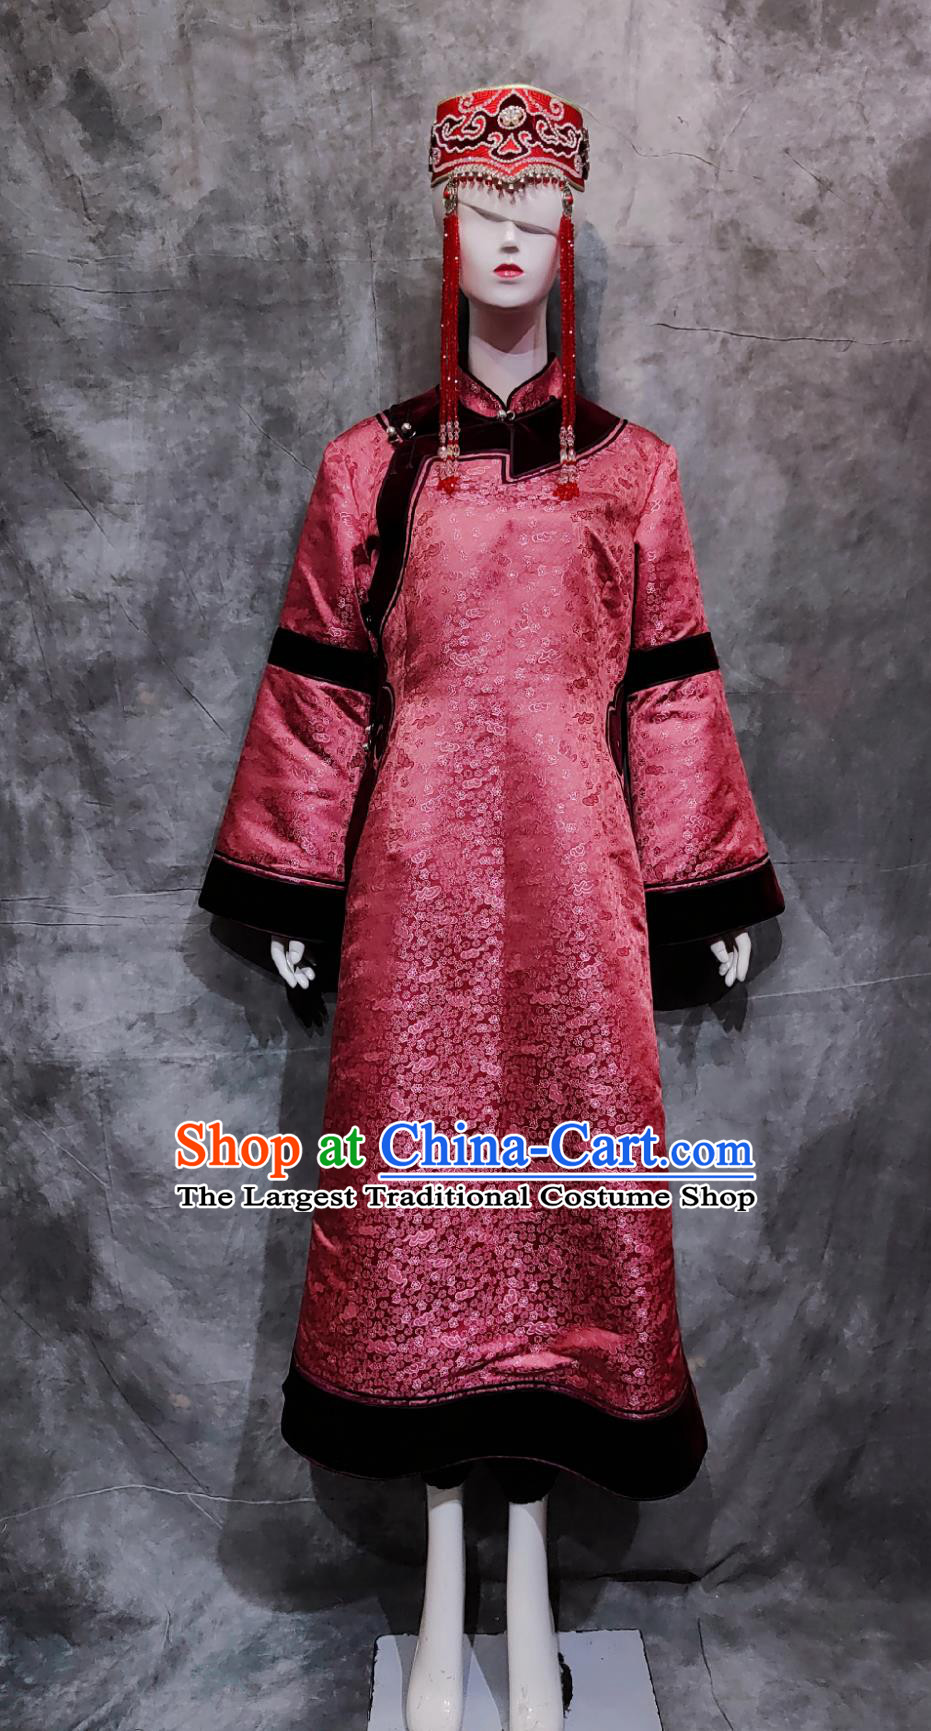 Chinese Daghur Ethnic Festival Costume China Daur National Minority Woman Clothing Traditional Dance Deep Pink Dress